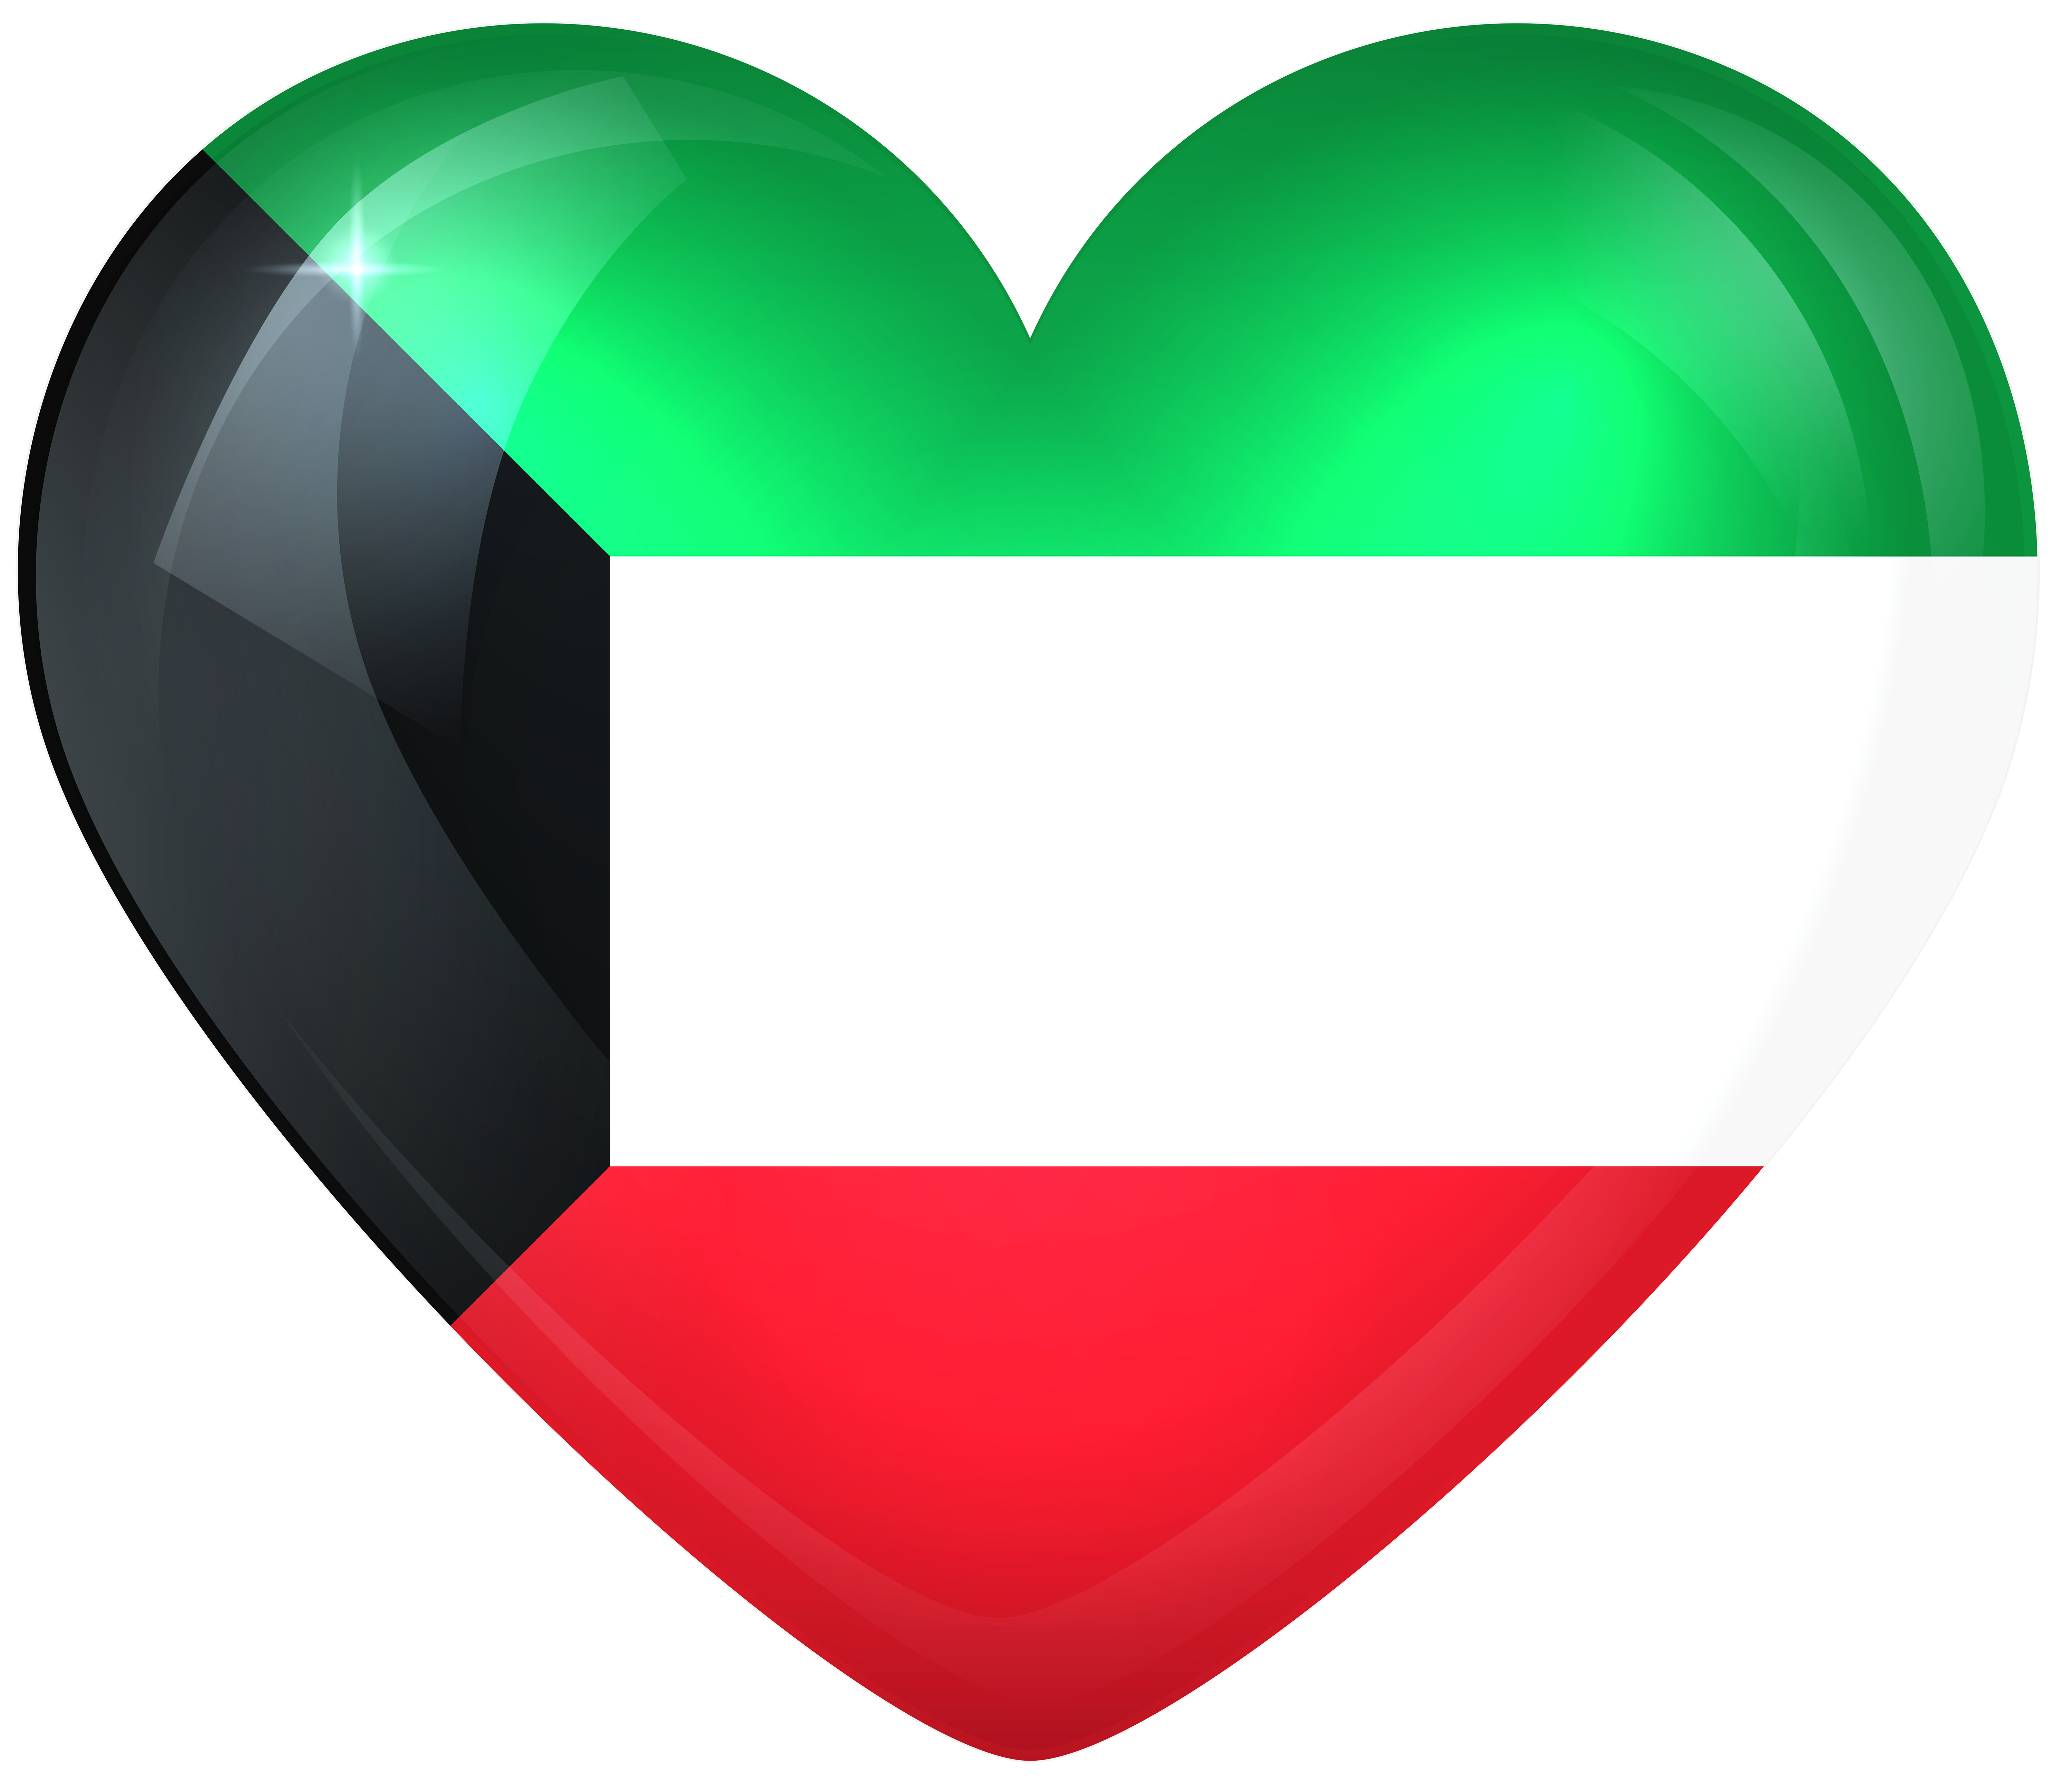 Kuwait Flag Heart Shaped Graphic